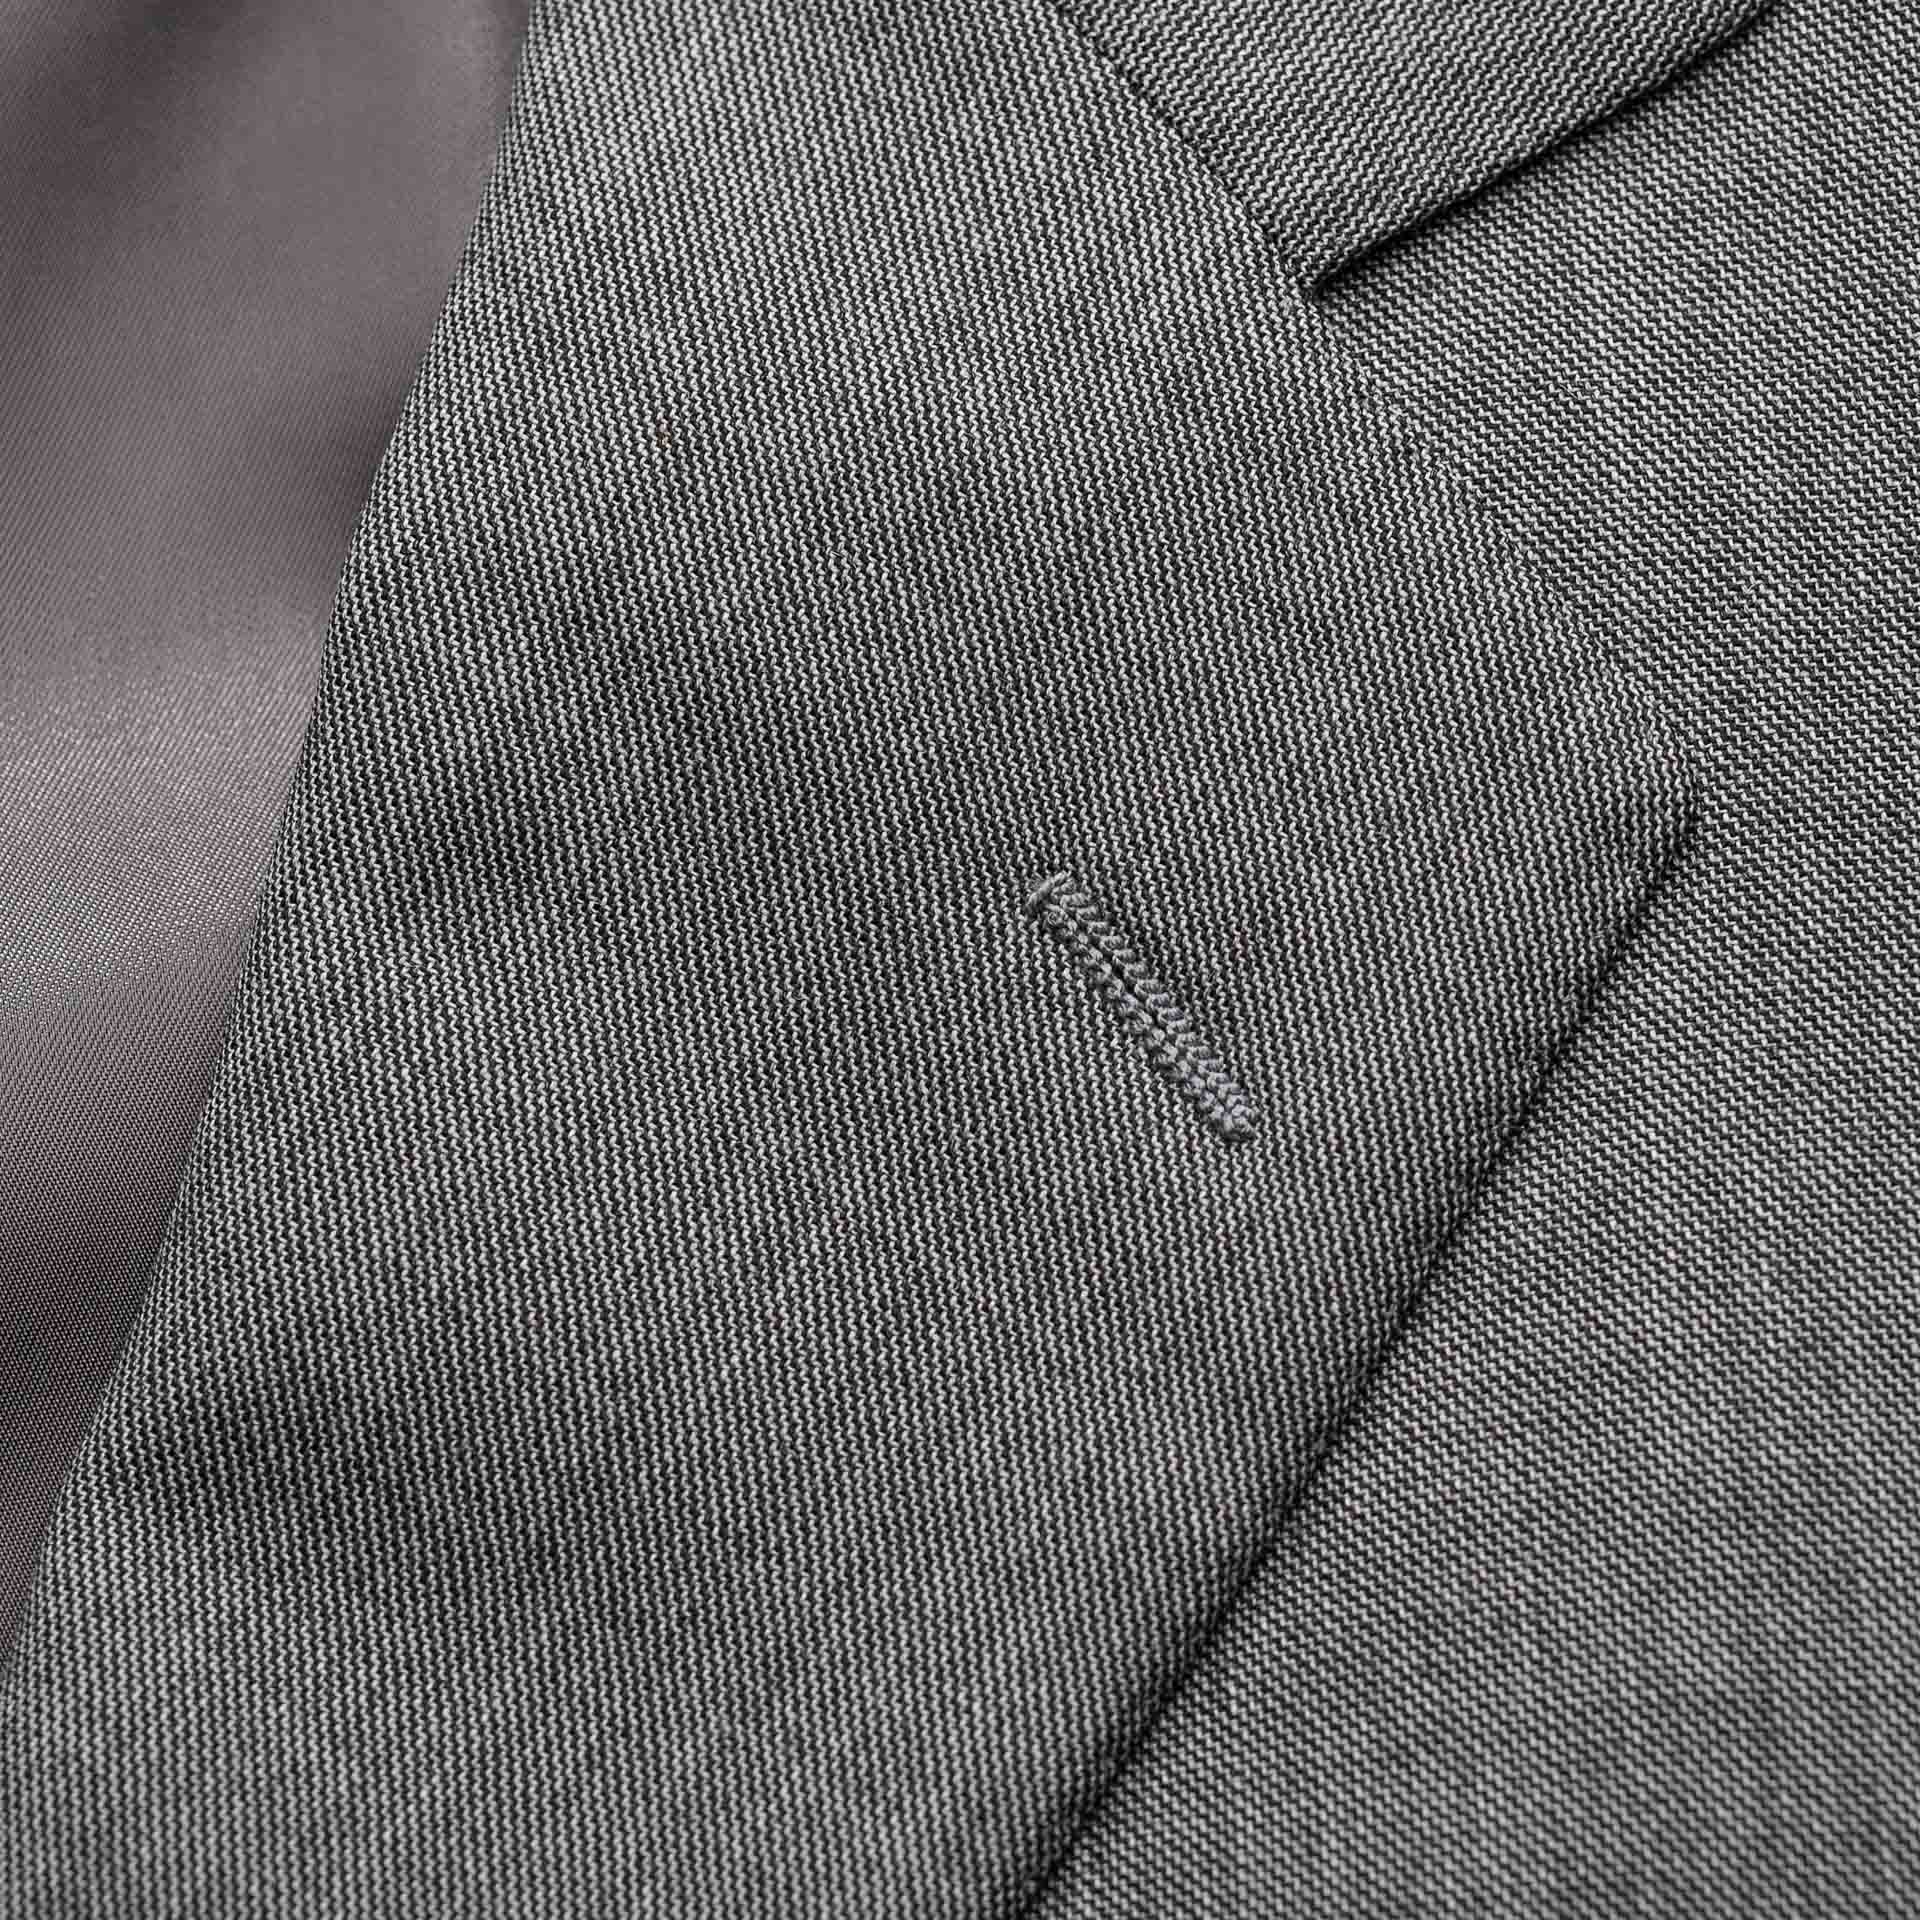 CASTANGIA 1850 Gray Wool Jacket Sport Coat EU 54 NEW US 44 Long CASTANGIA